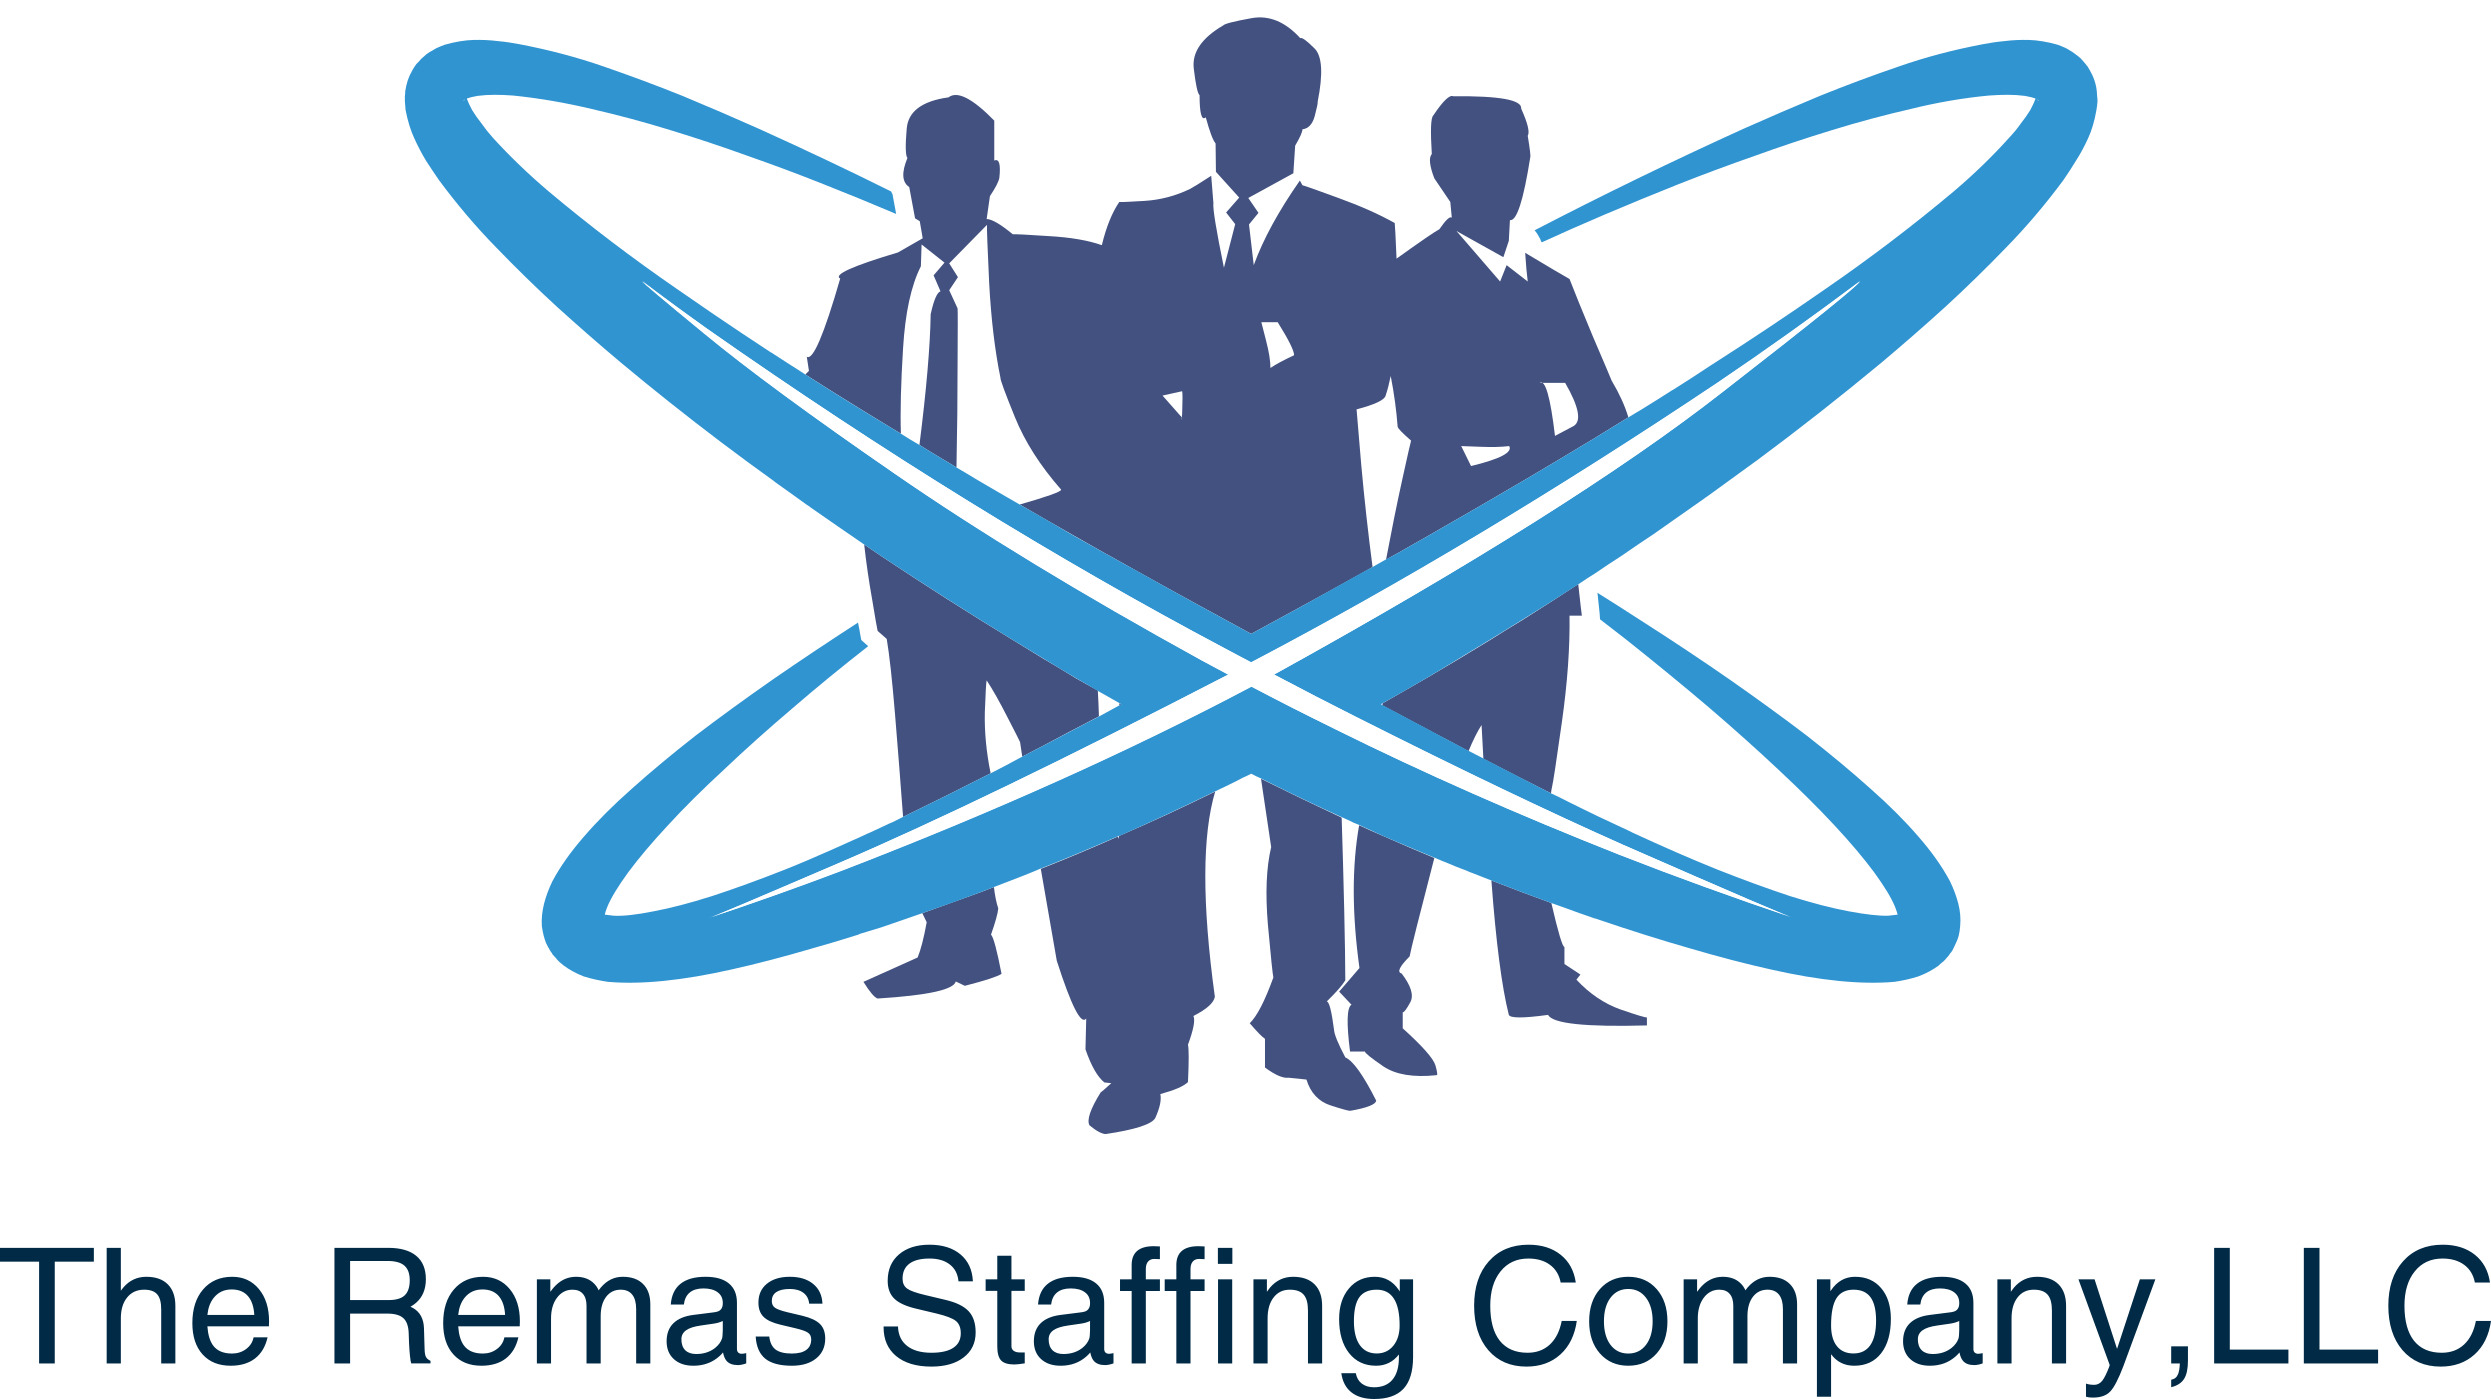 The Remas Staffing Company, LLC.